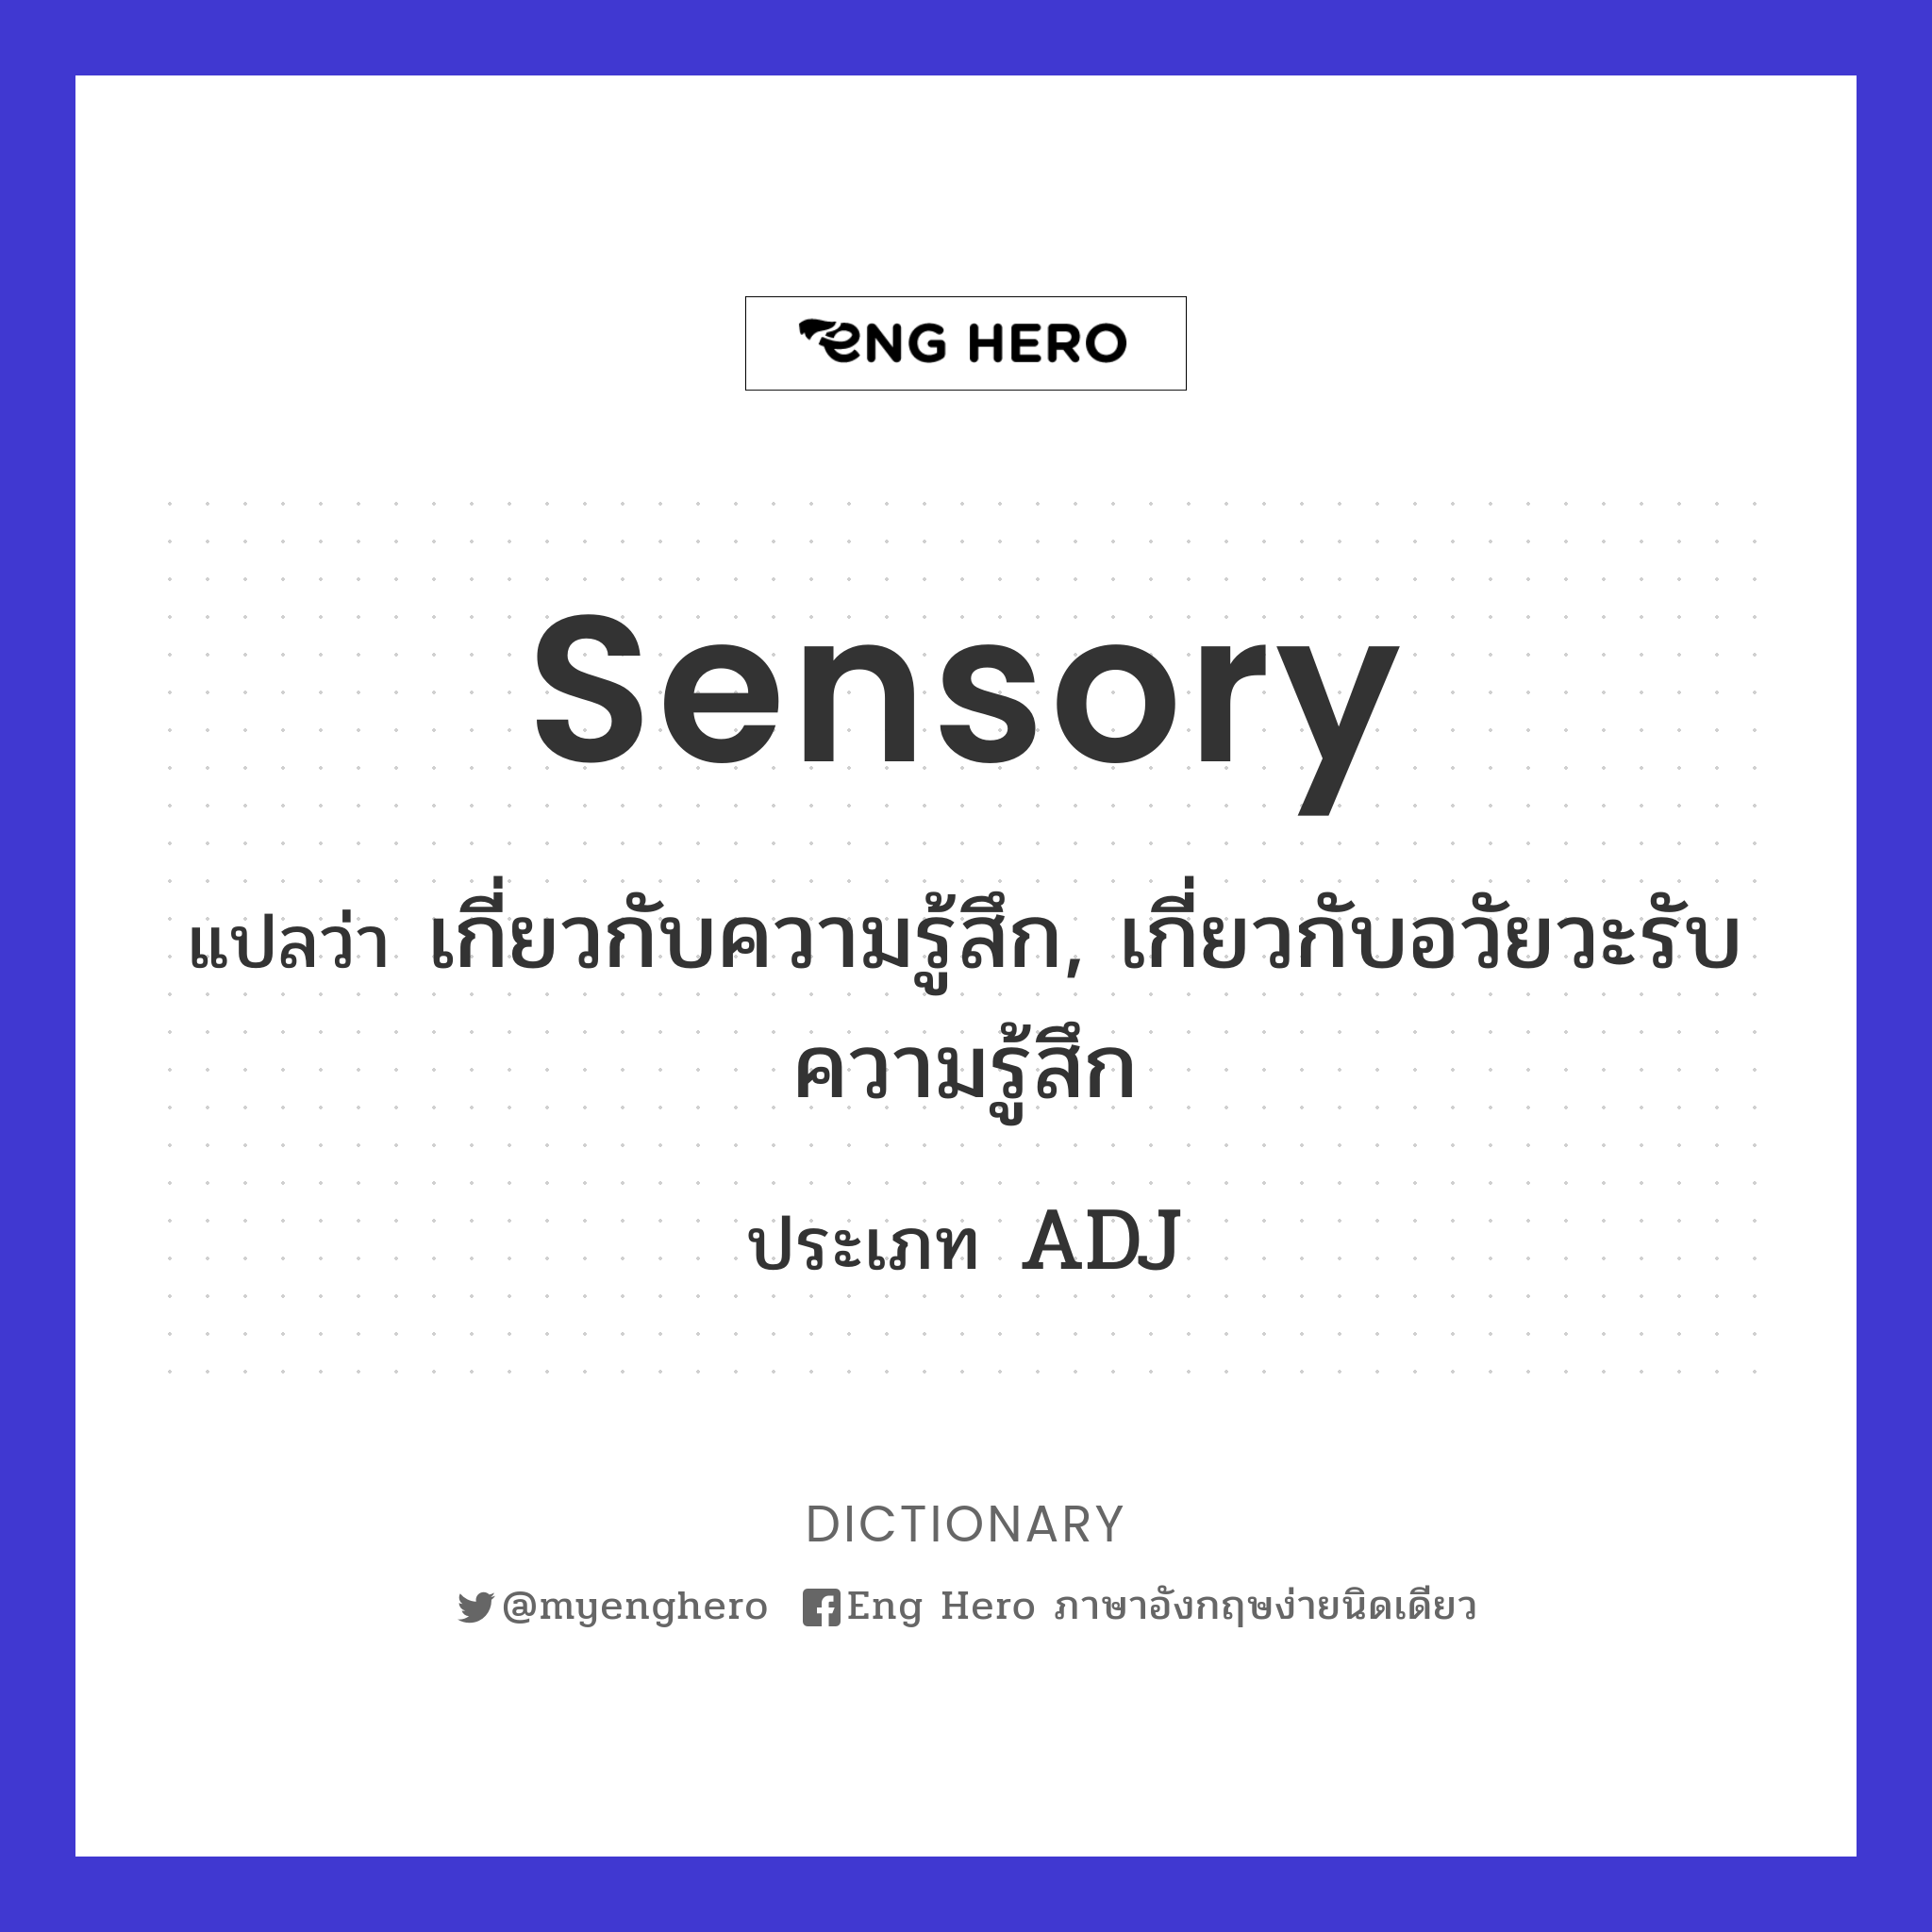 sensory